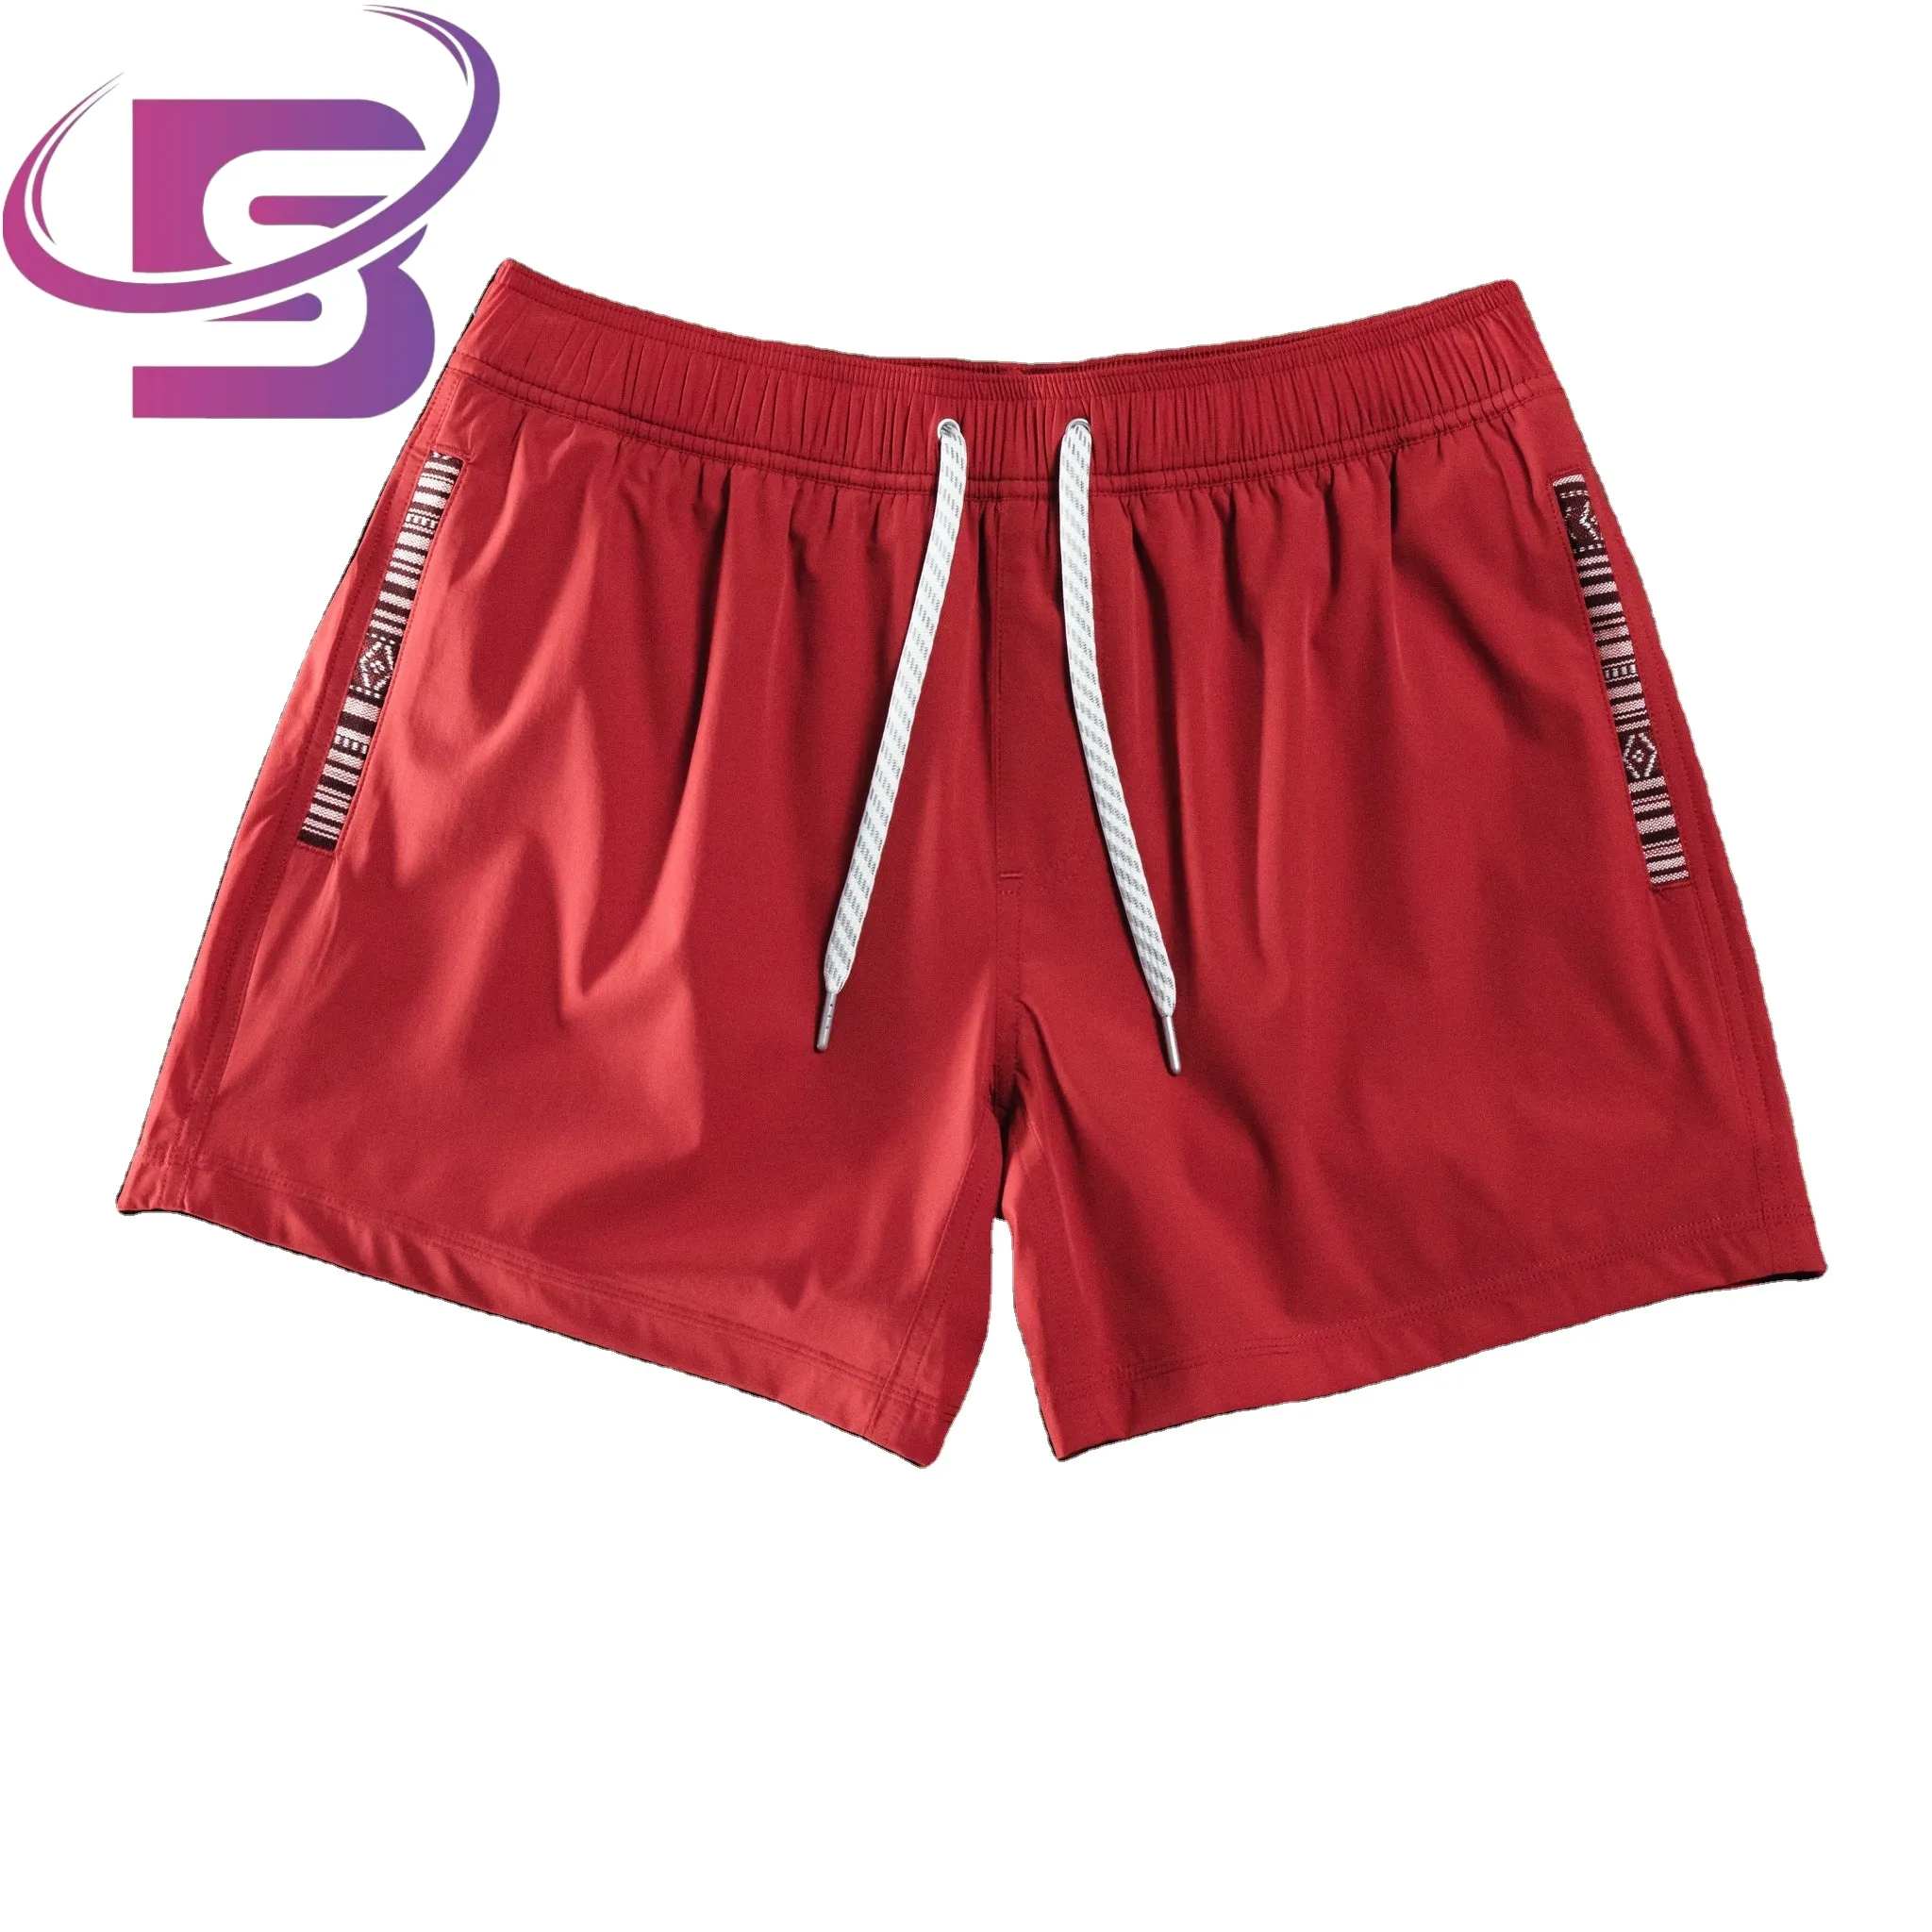 spandex shorts sale